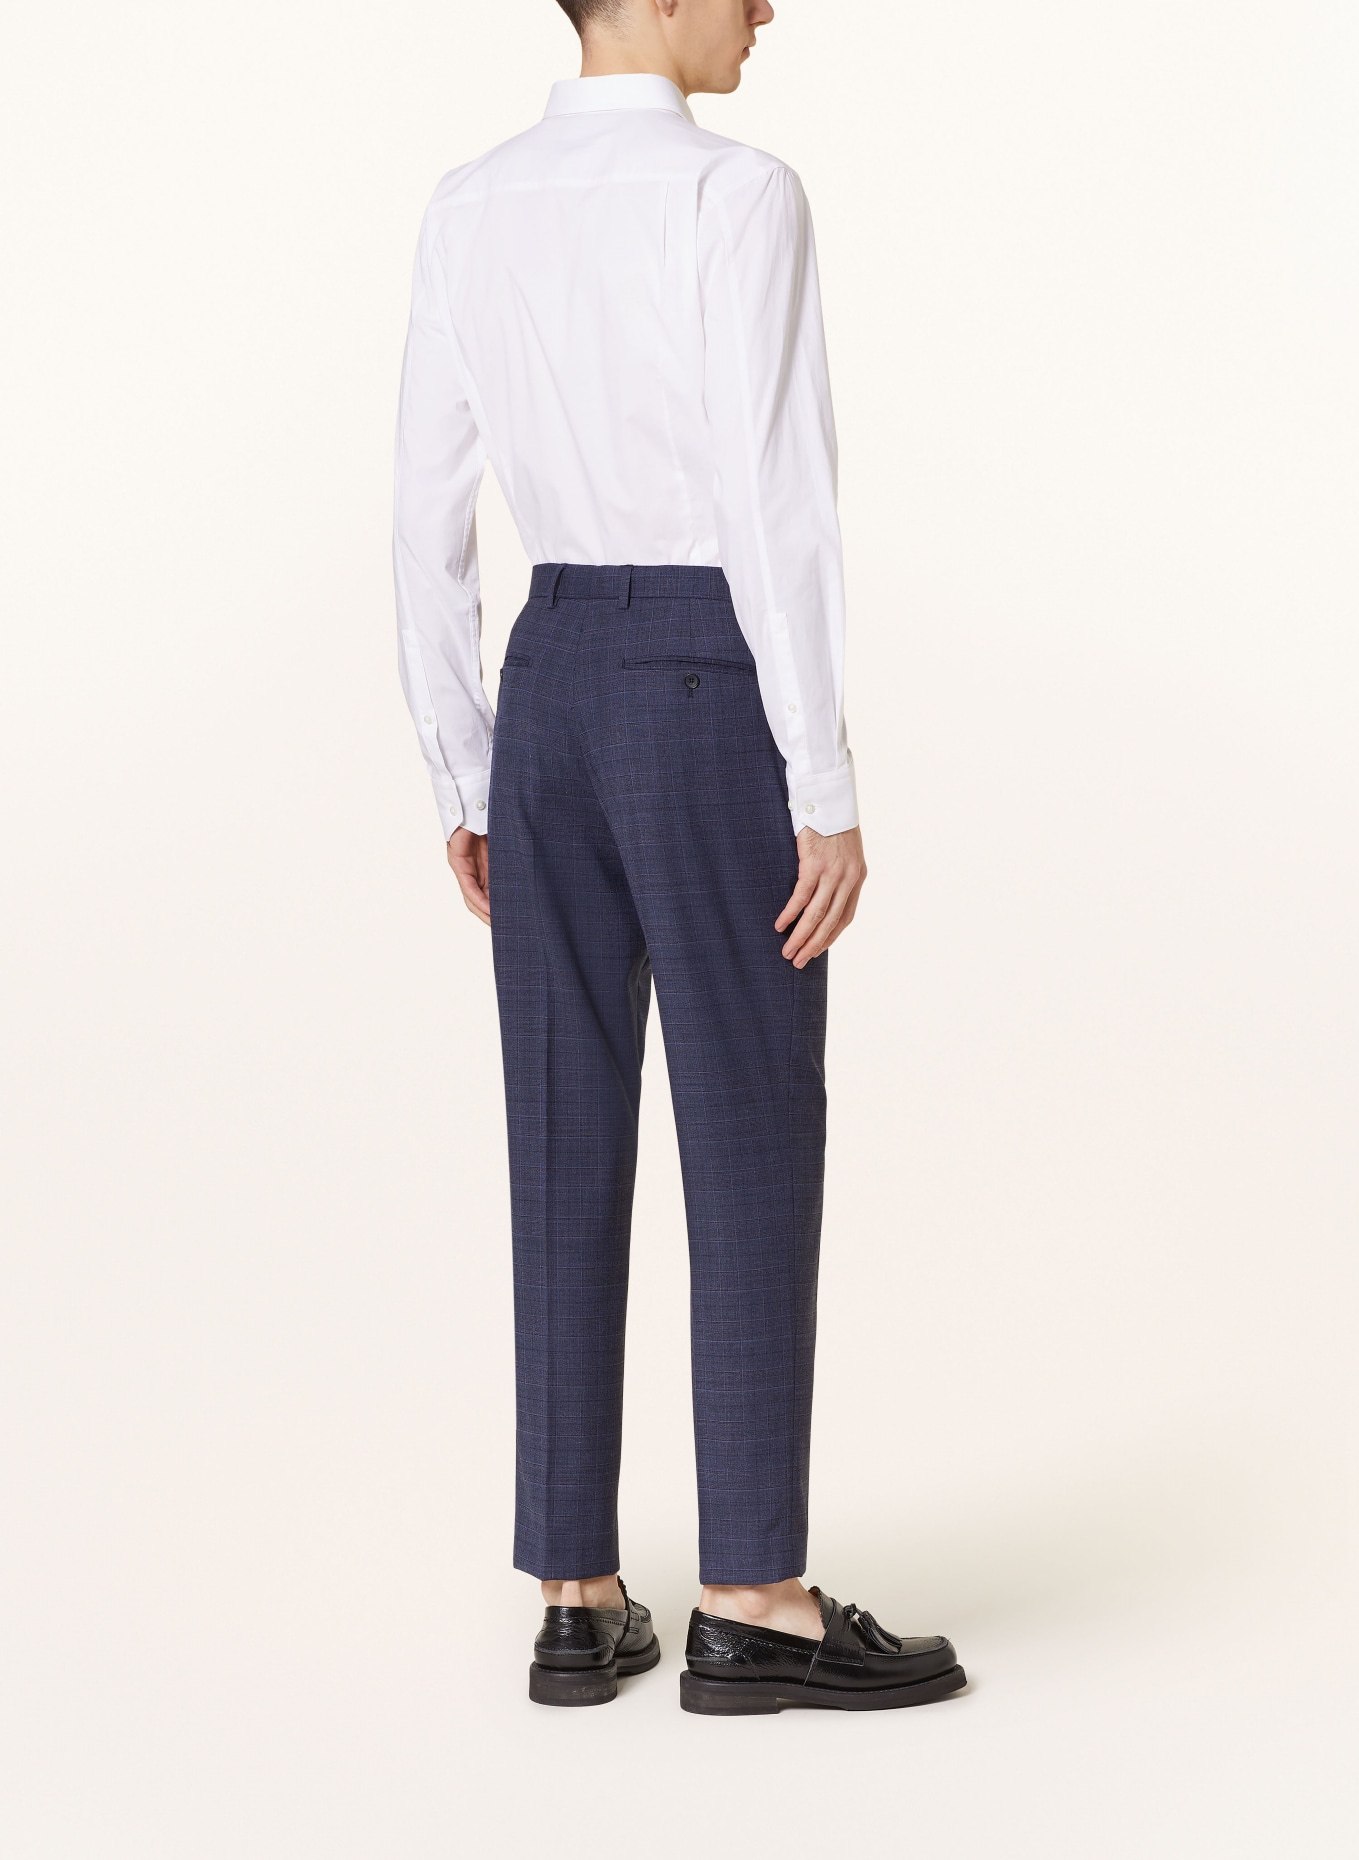 TED BAKER Anzughose CHELART Slim Fit, Farbe: NAVY NAVY (Bild 4)